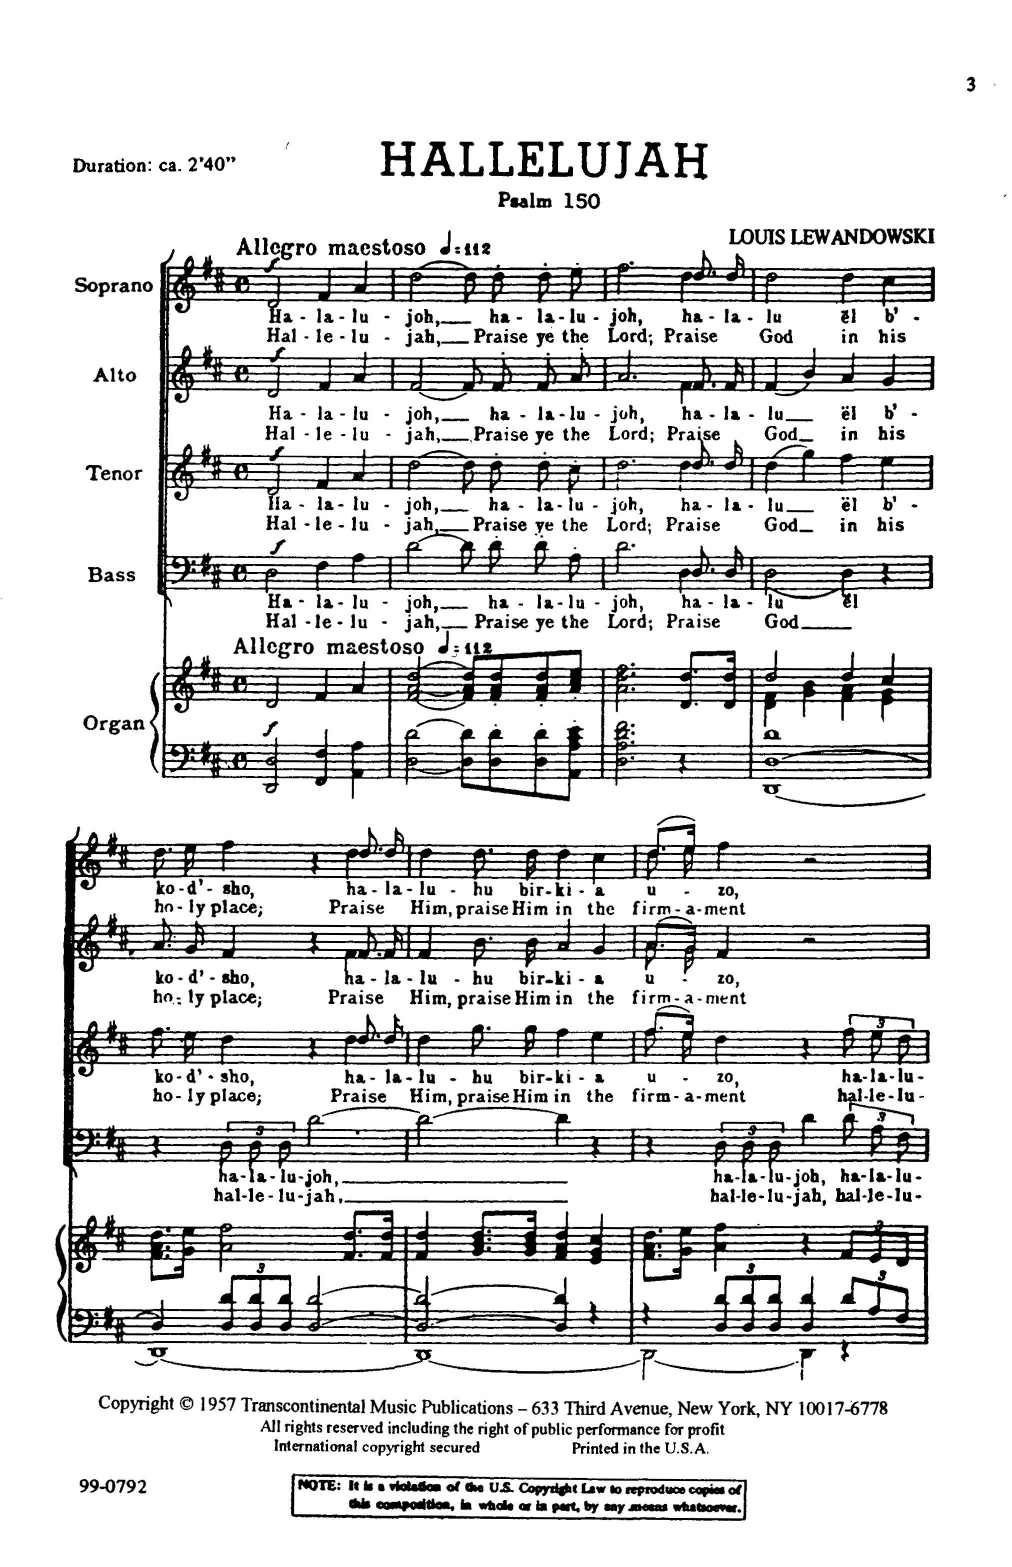 Louis Lewandowski Hallelujah (Psalm 150) Sheet Music Notes & Chords for SATB Choir - Download or Print PDF